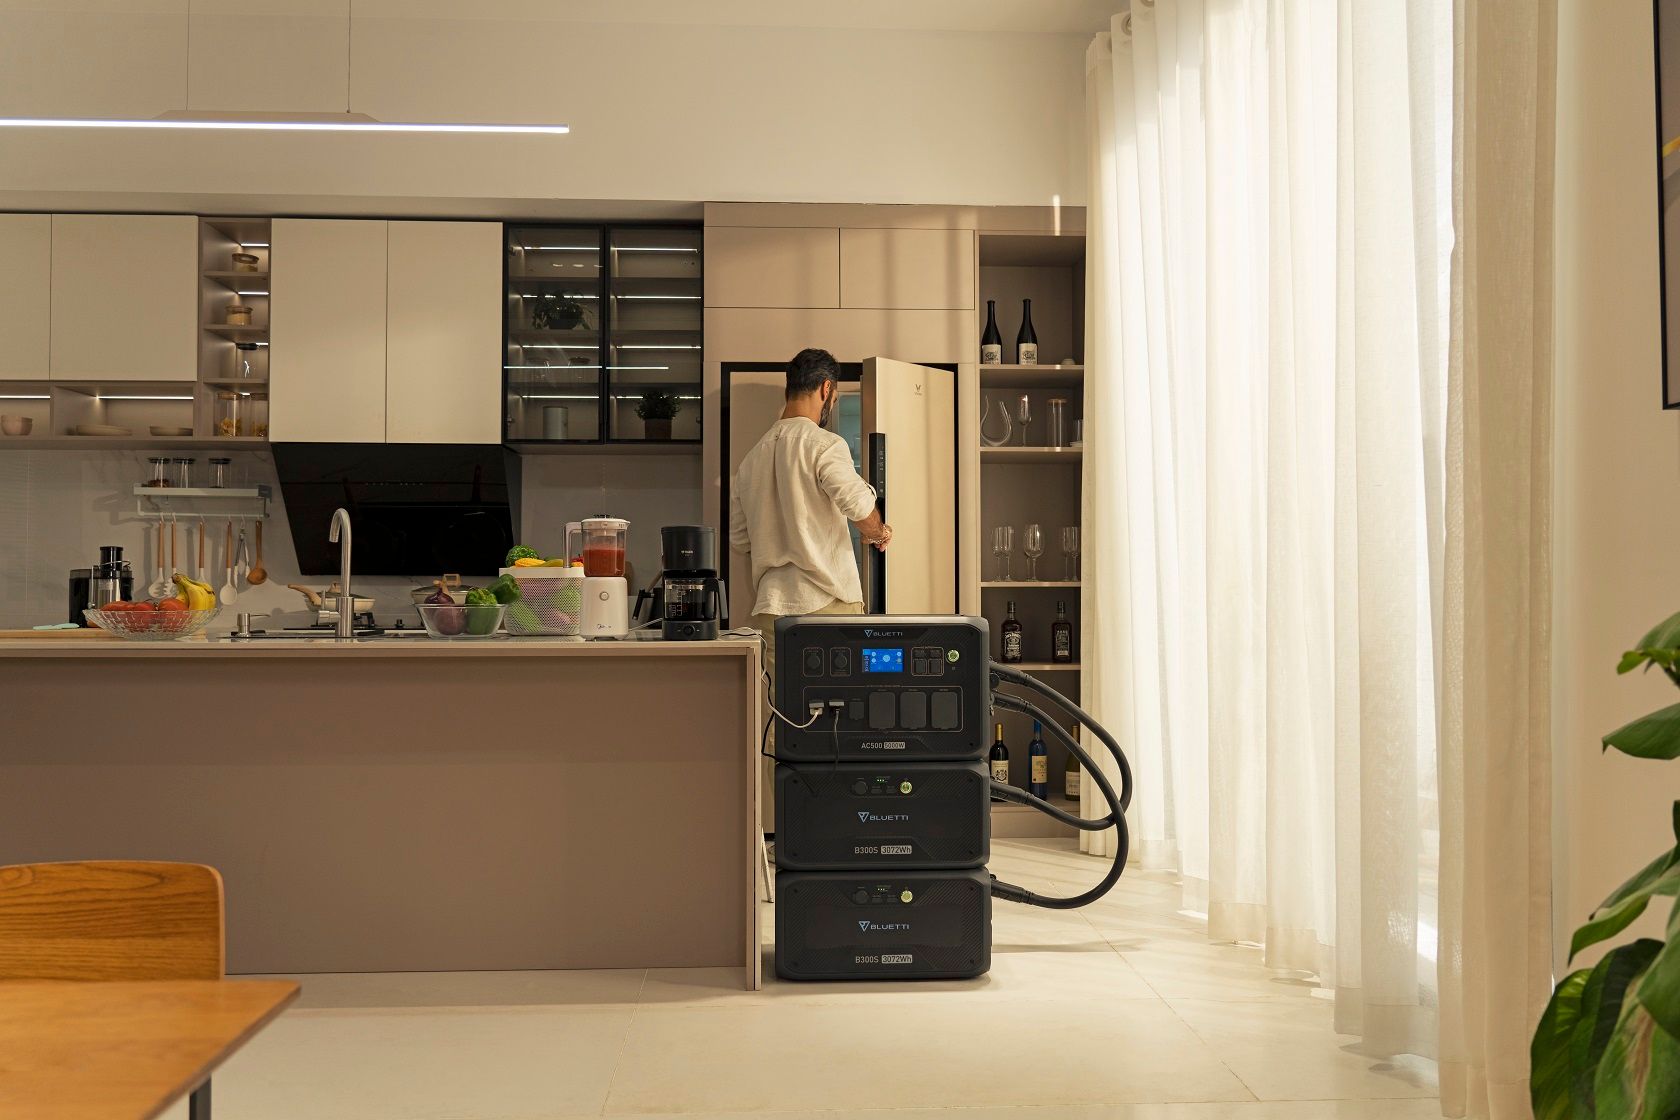 bluetti ac500 power station powering kitchen appliances